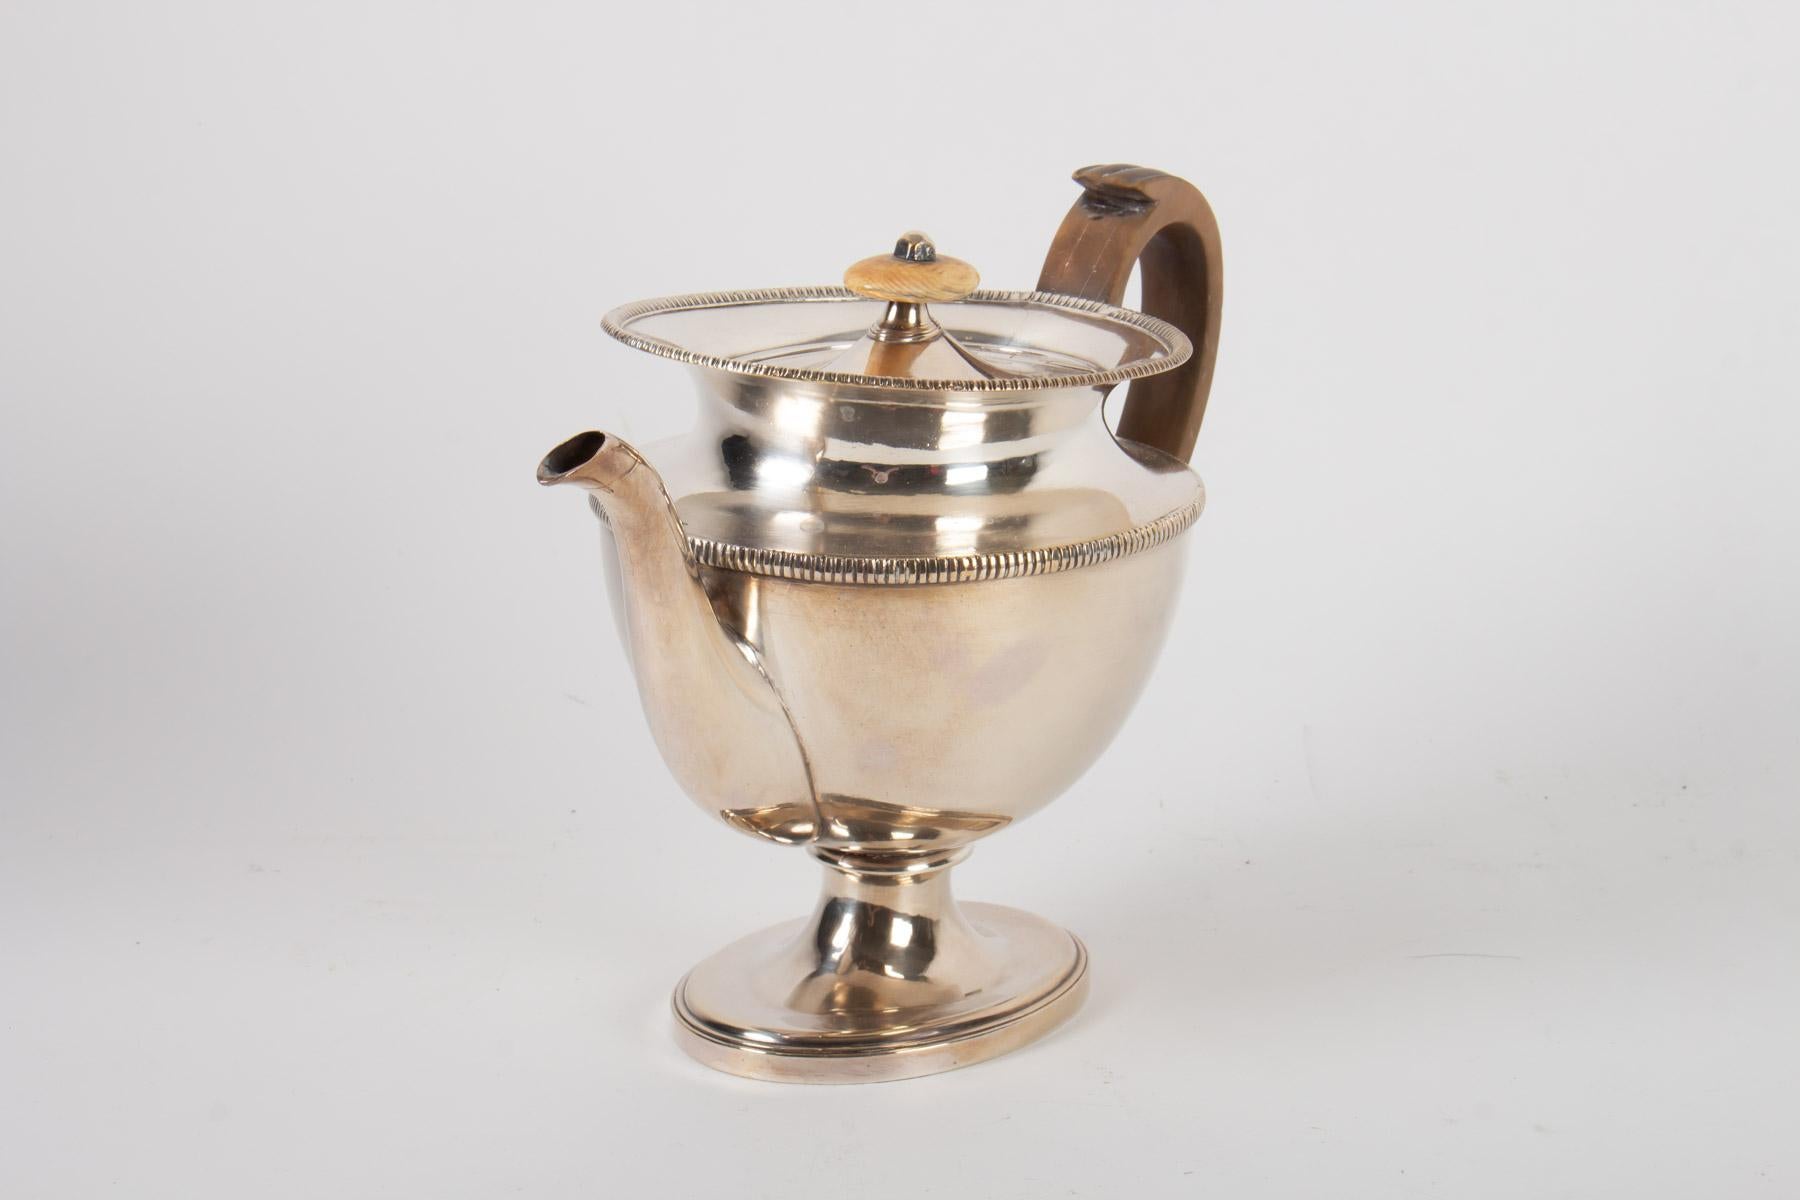 Teapot, silver metal, 19th century antiquity, Empire period, carved wood handle
Measures: H 20cm, W 14cm, D 30cm.